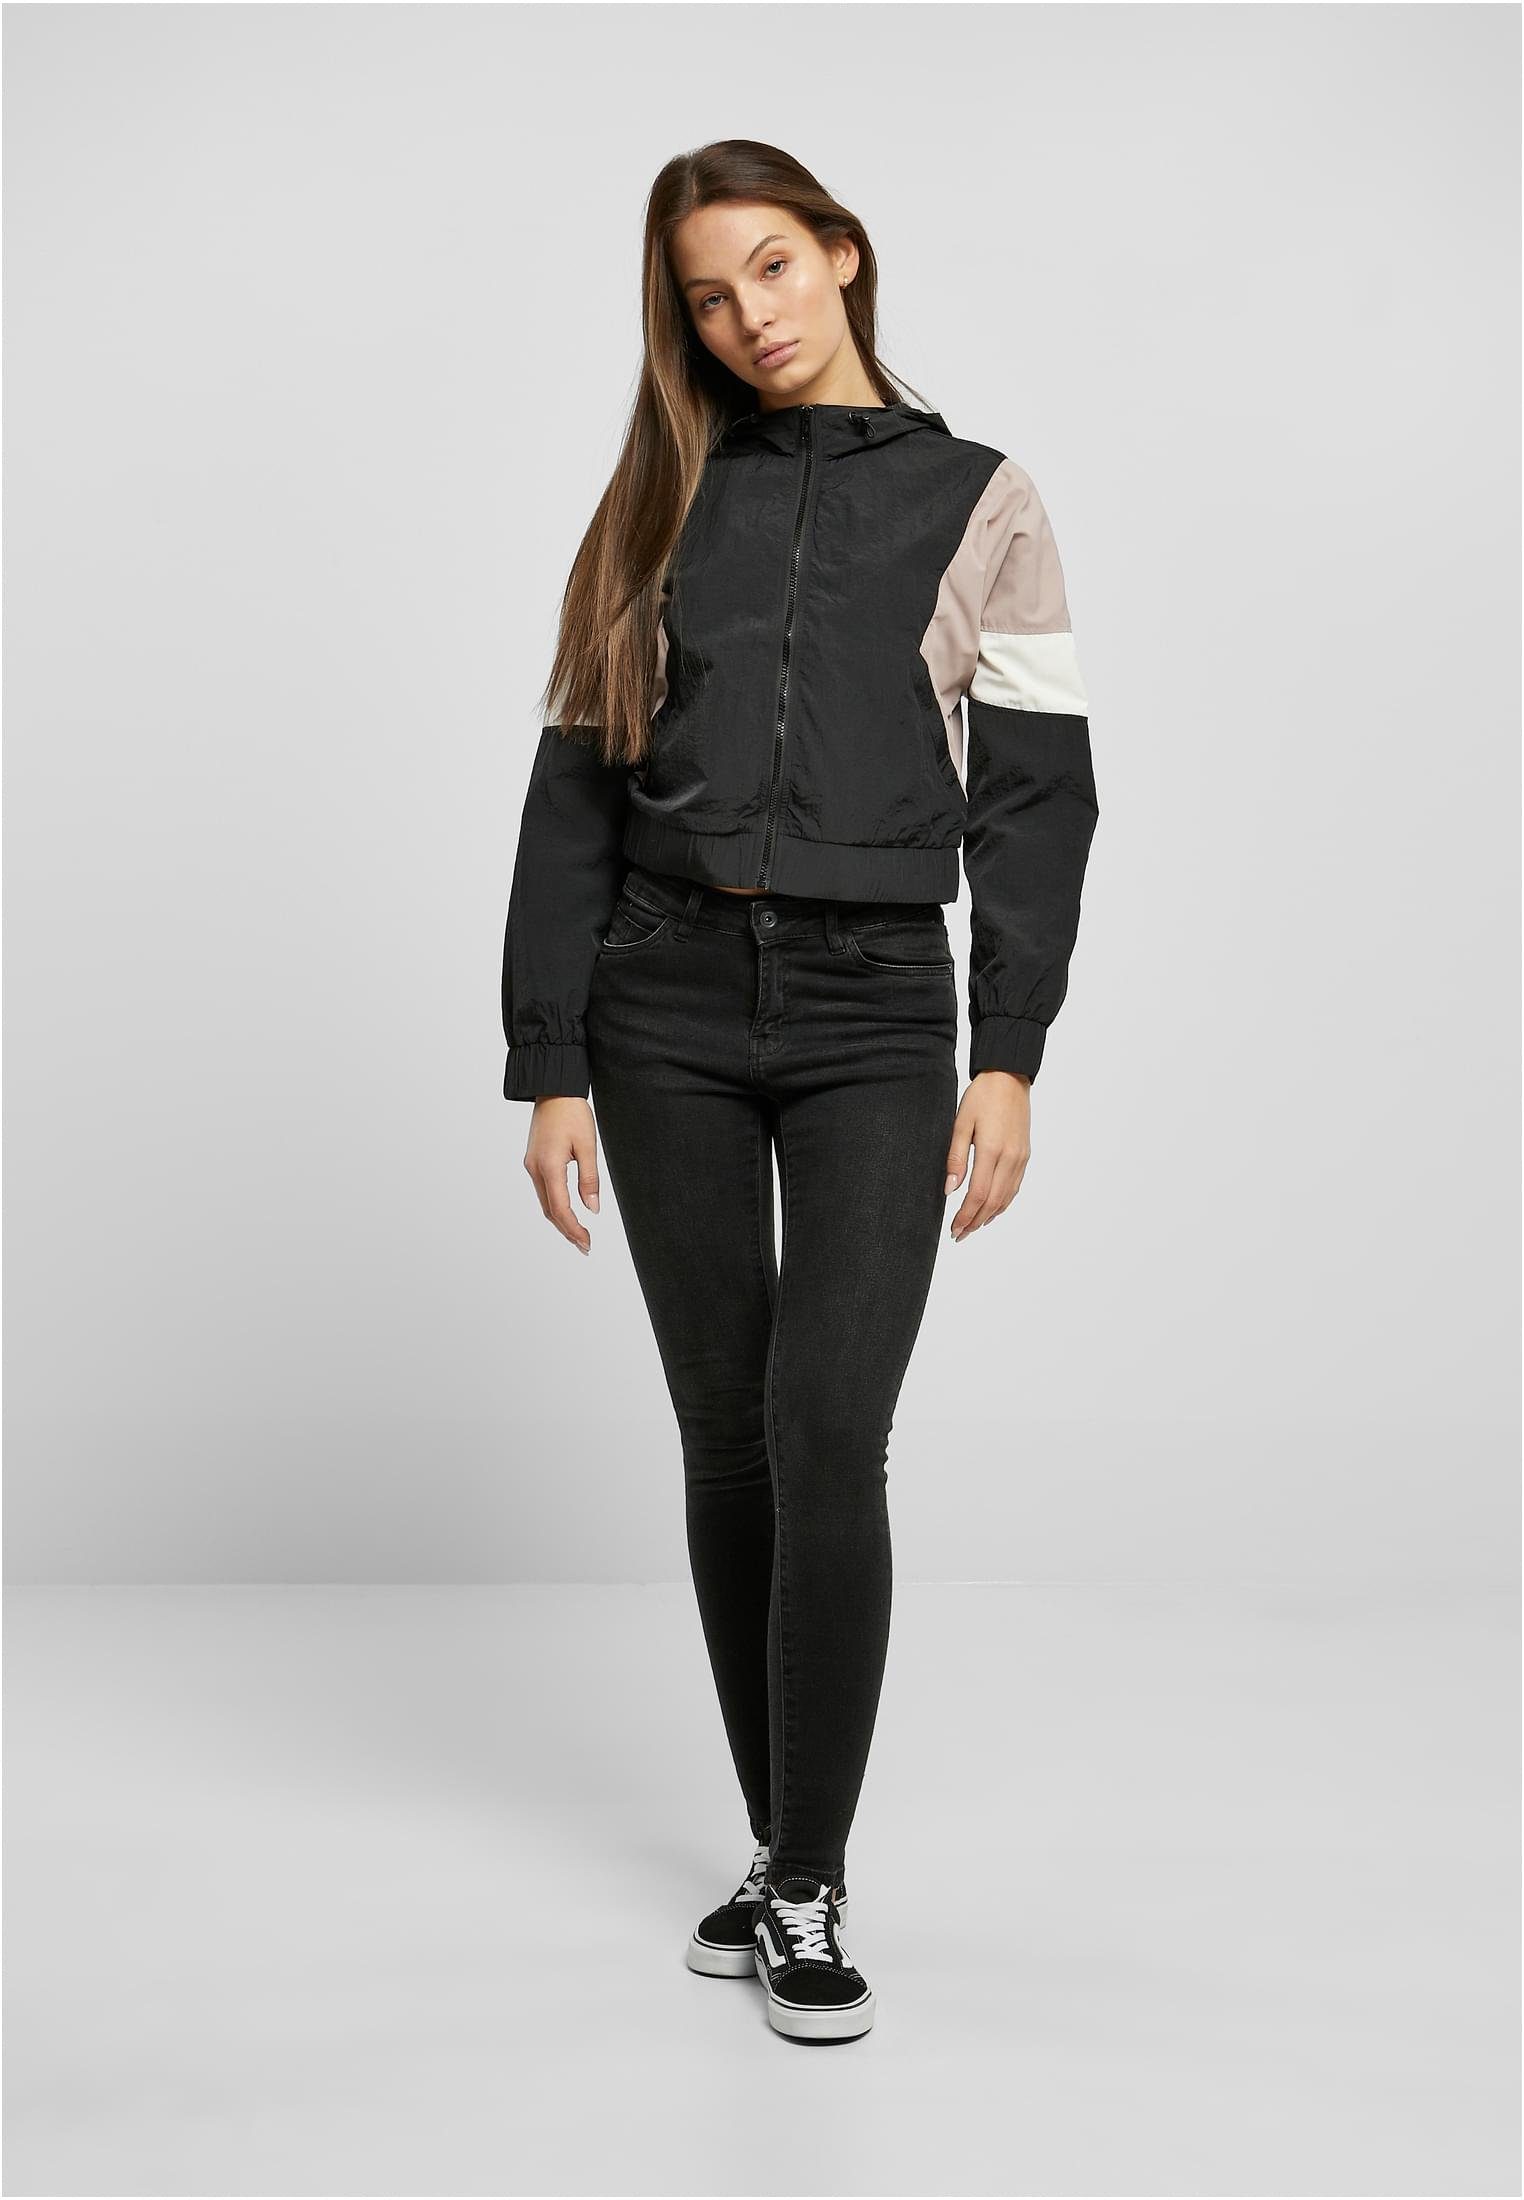 URBAN CLASSICS Short (1-St) black/duskrose/whitesand Crinkle Jacket 3-Tone Damen Outdoorjacke Ladies